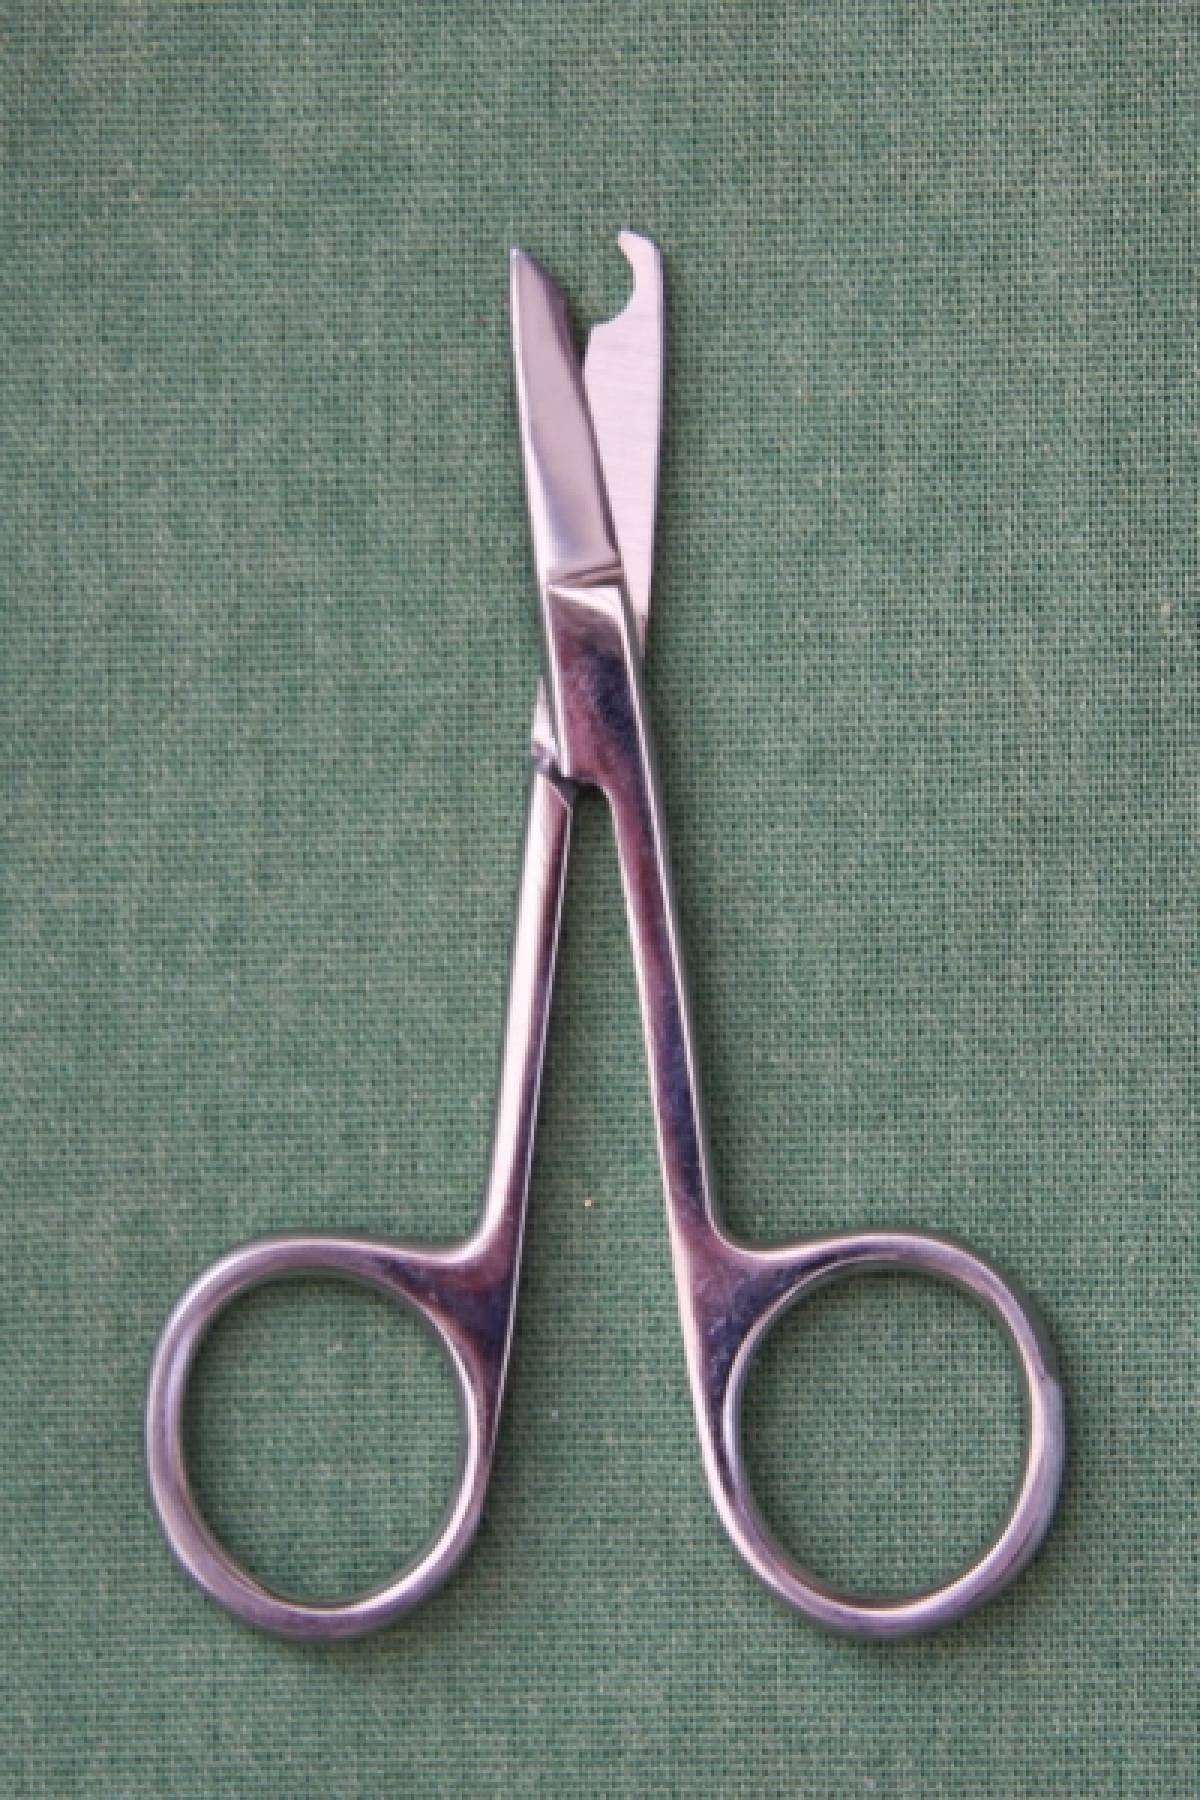 snip easy snip scissors